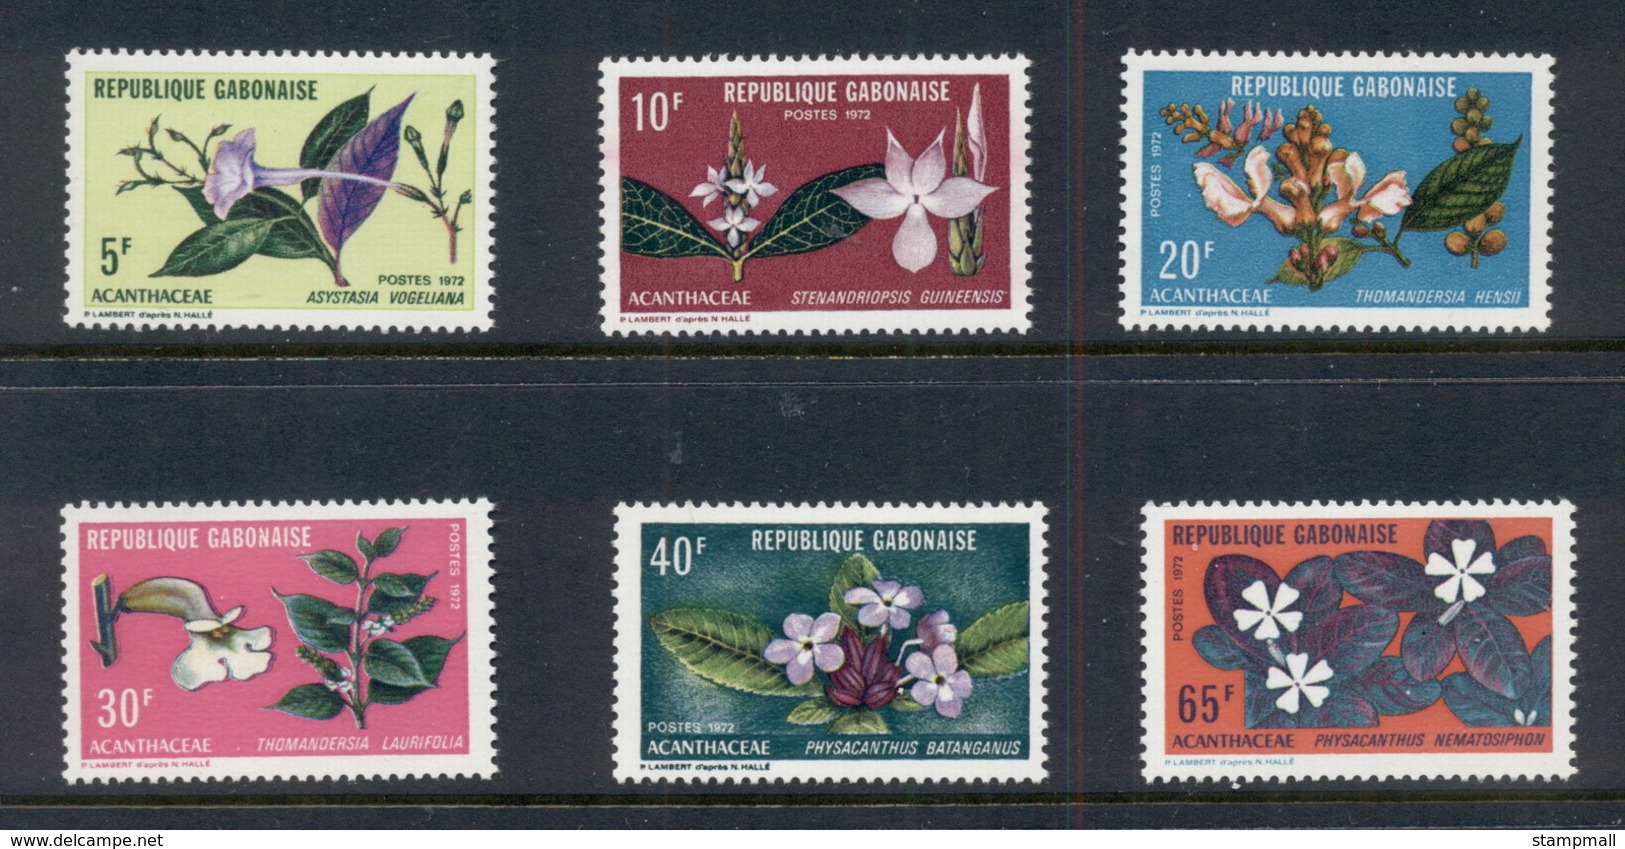 Gabon 1972 Flowers, Acanthus MUH - Gabon